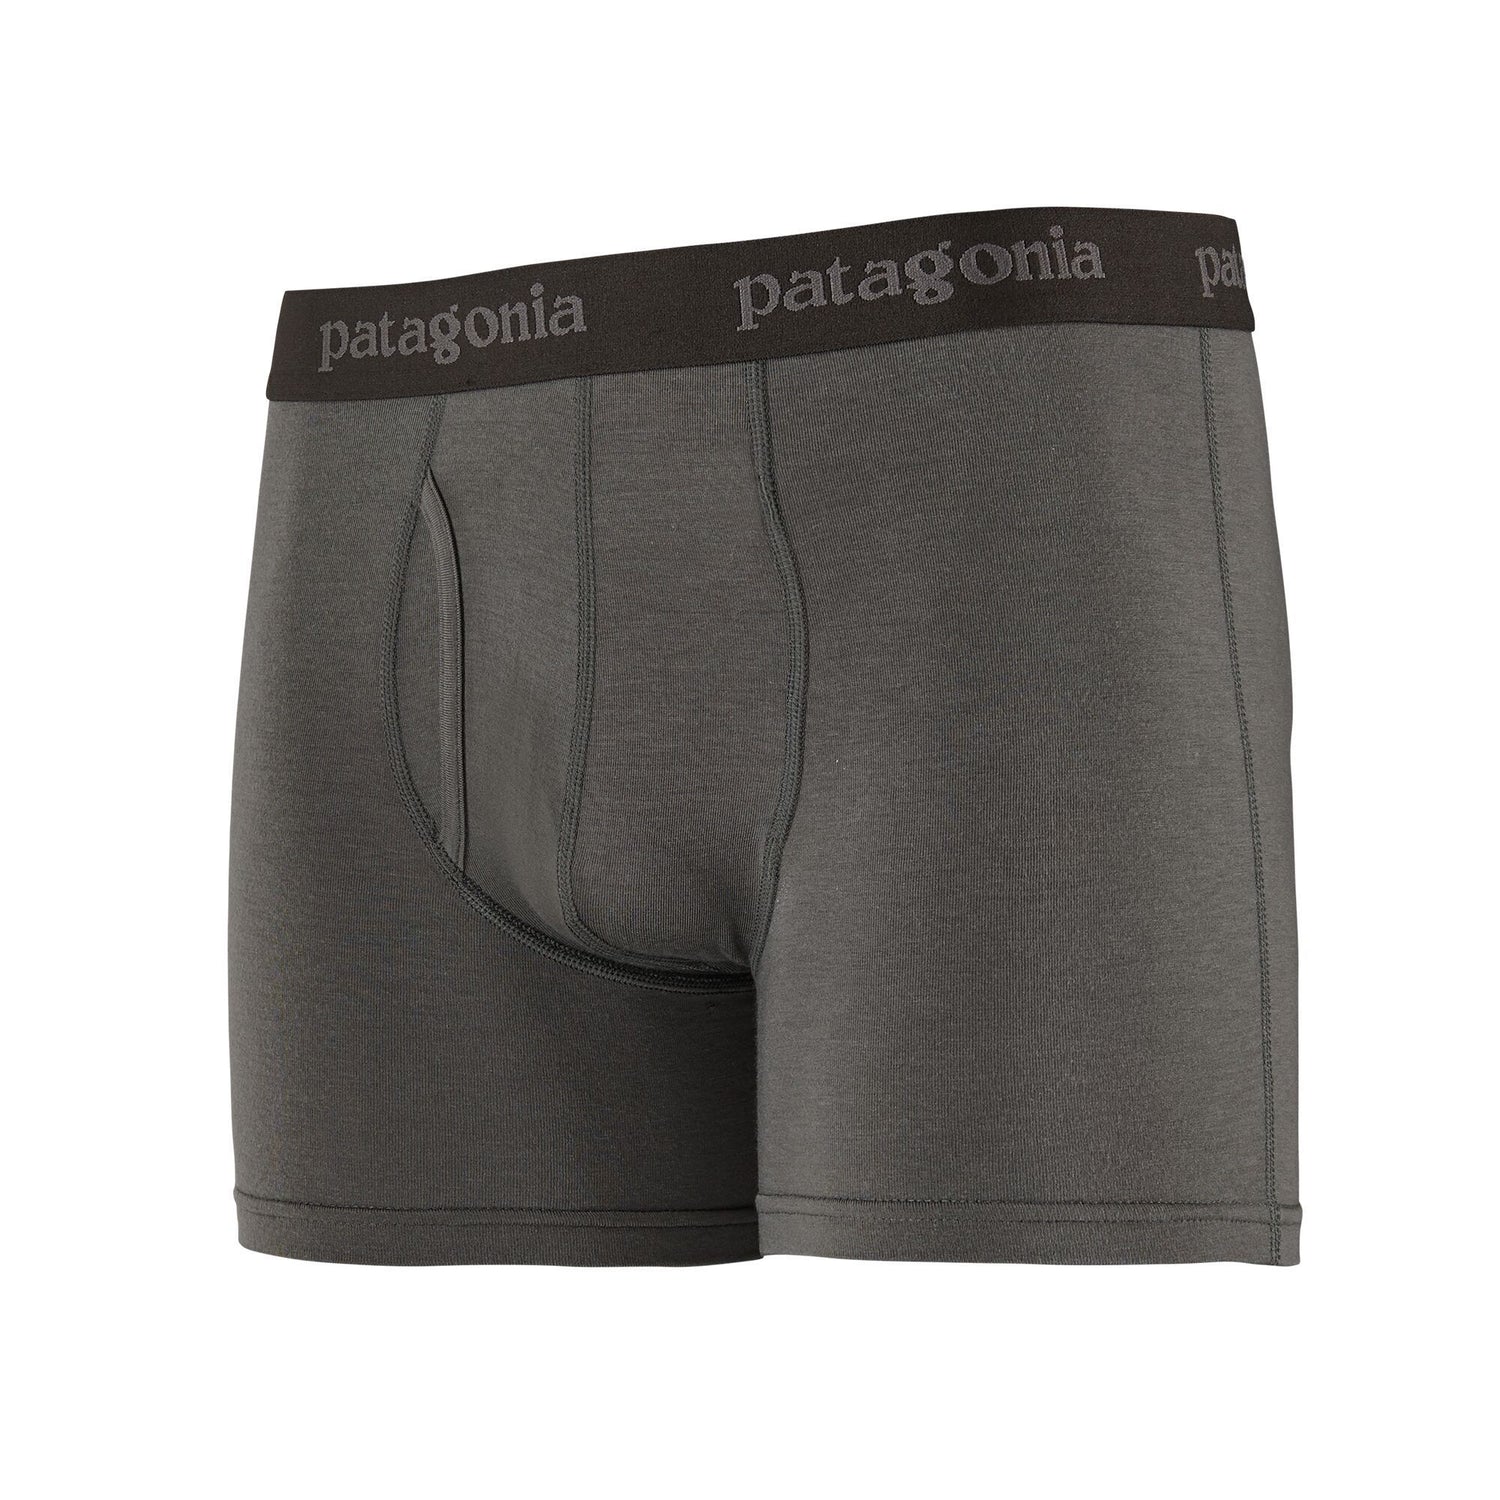 Patagonia - M's Essential Boxer Briefs  - From Wood-based TENCEL - Weekendbee - sustainable sportswear